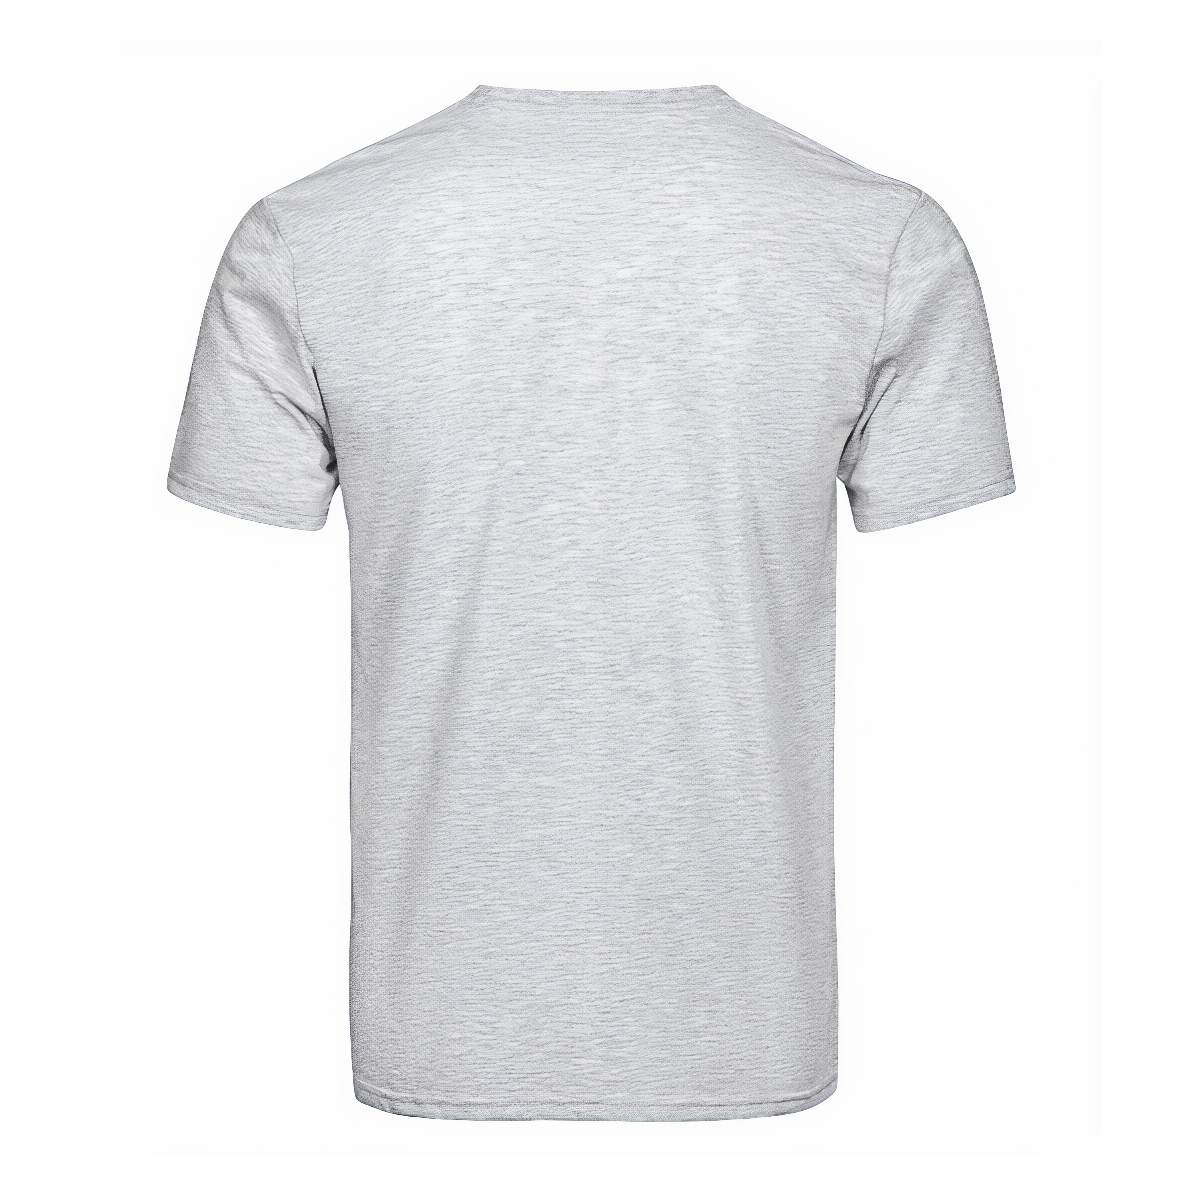 Williams Tartan Crest T-shirt - I'm not yelling style